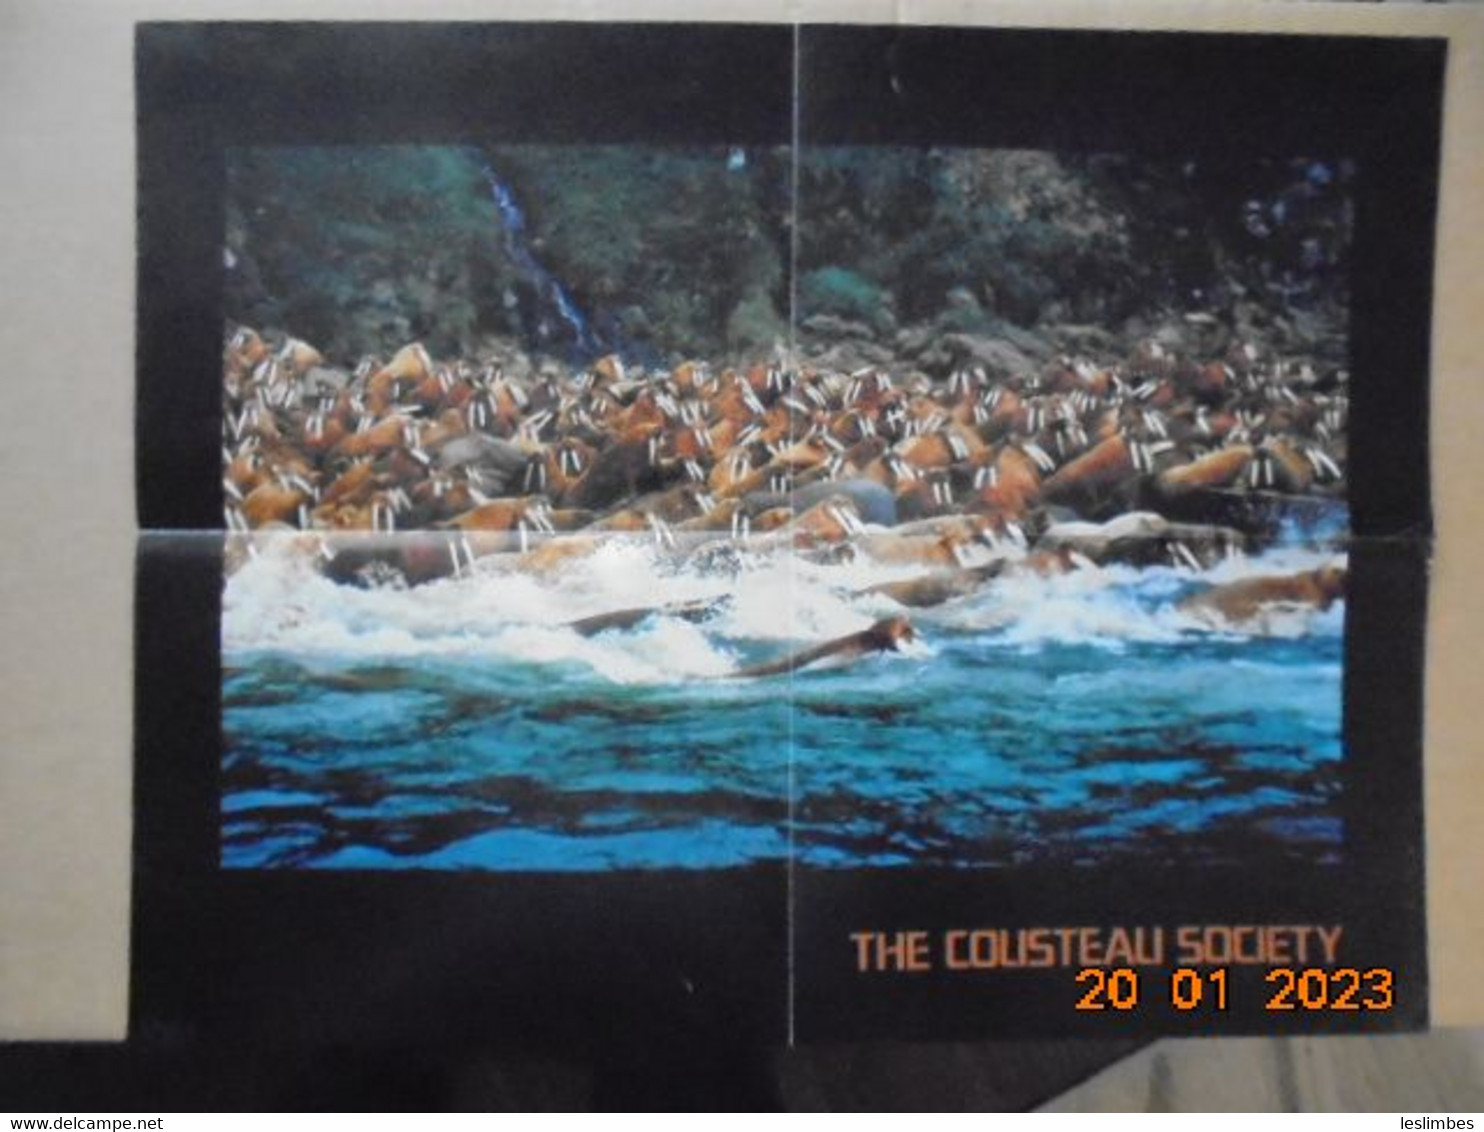 Cousteau Society Bulletin Et Affiche En Anglais : Calypso Log, Volume 3, Number 6 (November - December 1976) - Im Freien